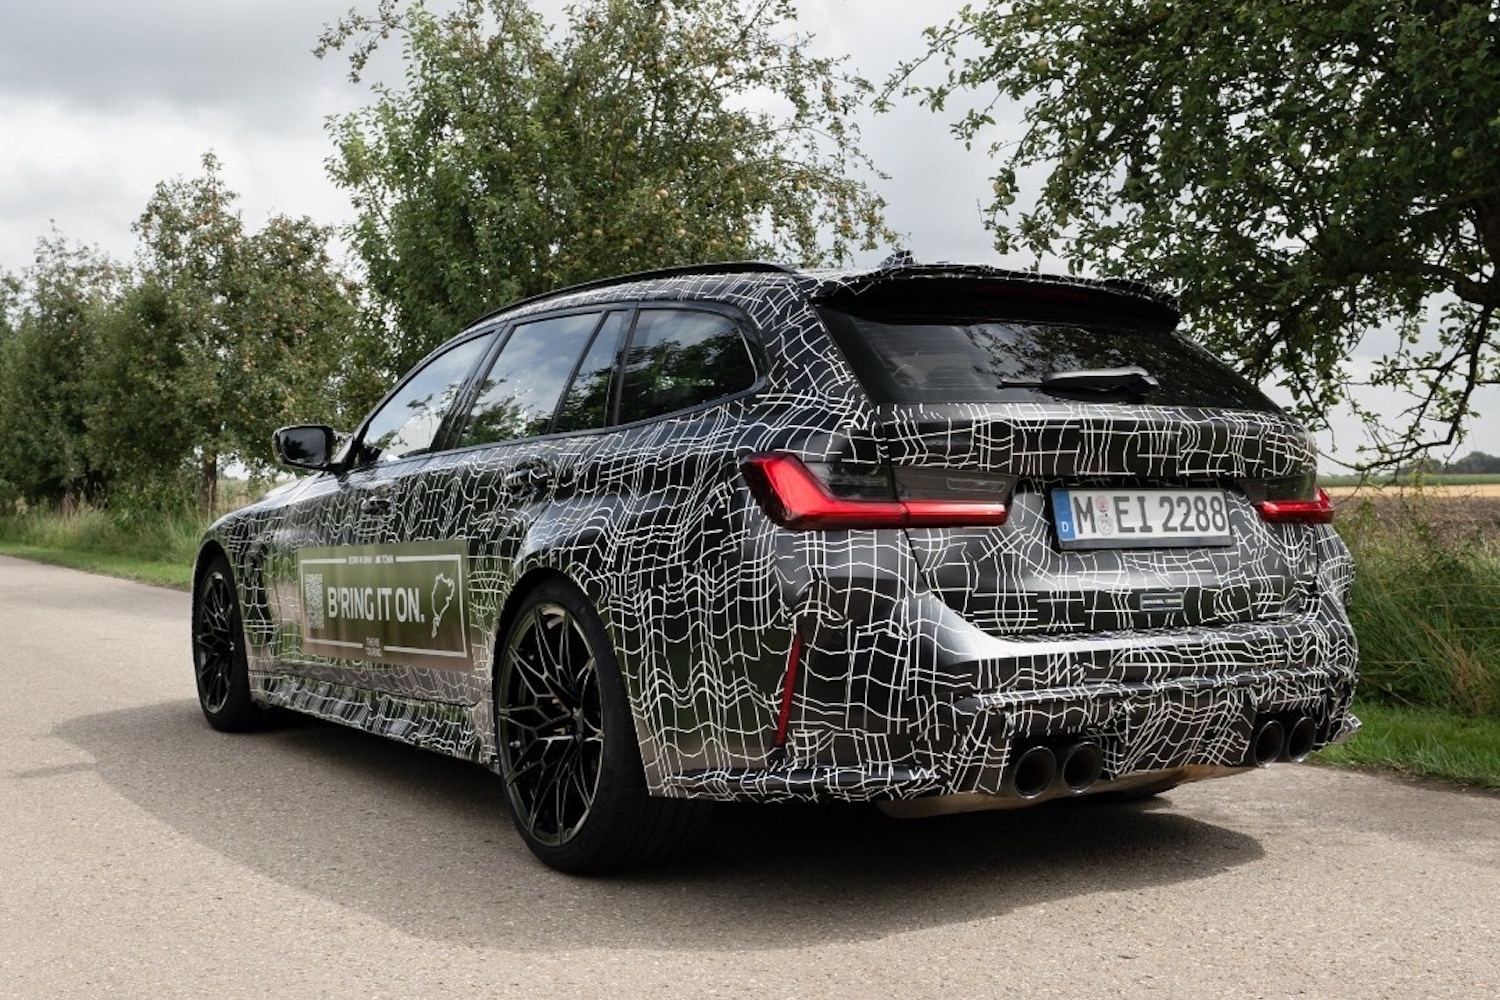 More Spy Shots Emerge Of BMW’s Hotly Anticipated M3 Wagon